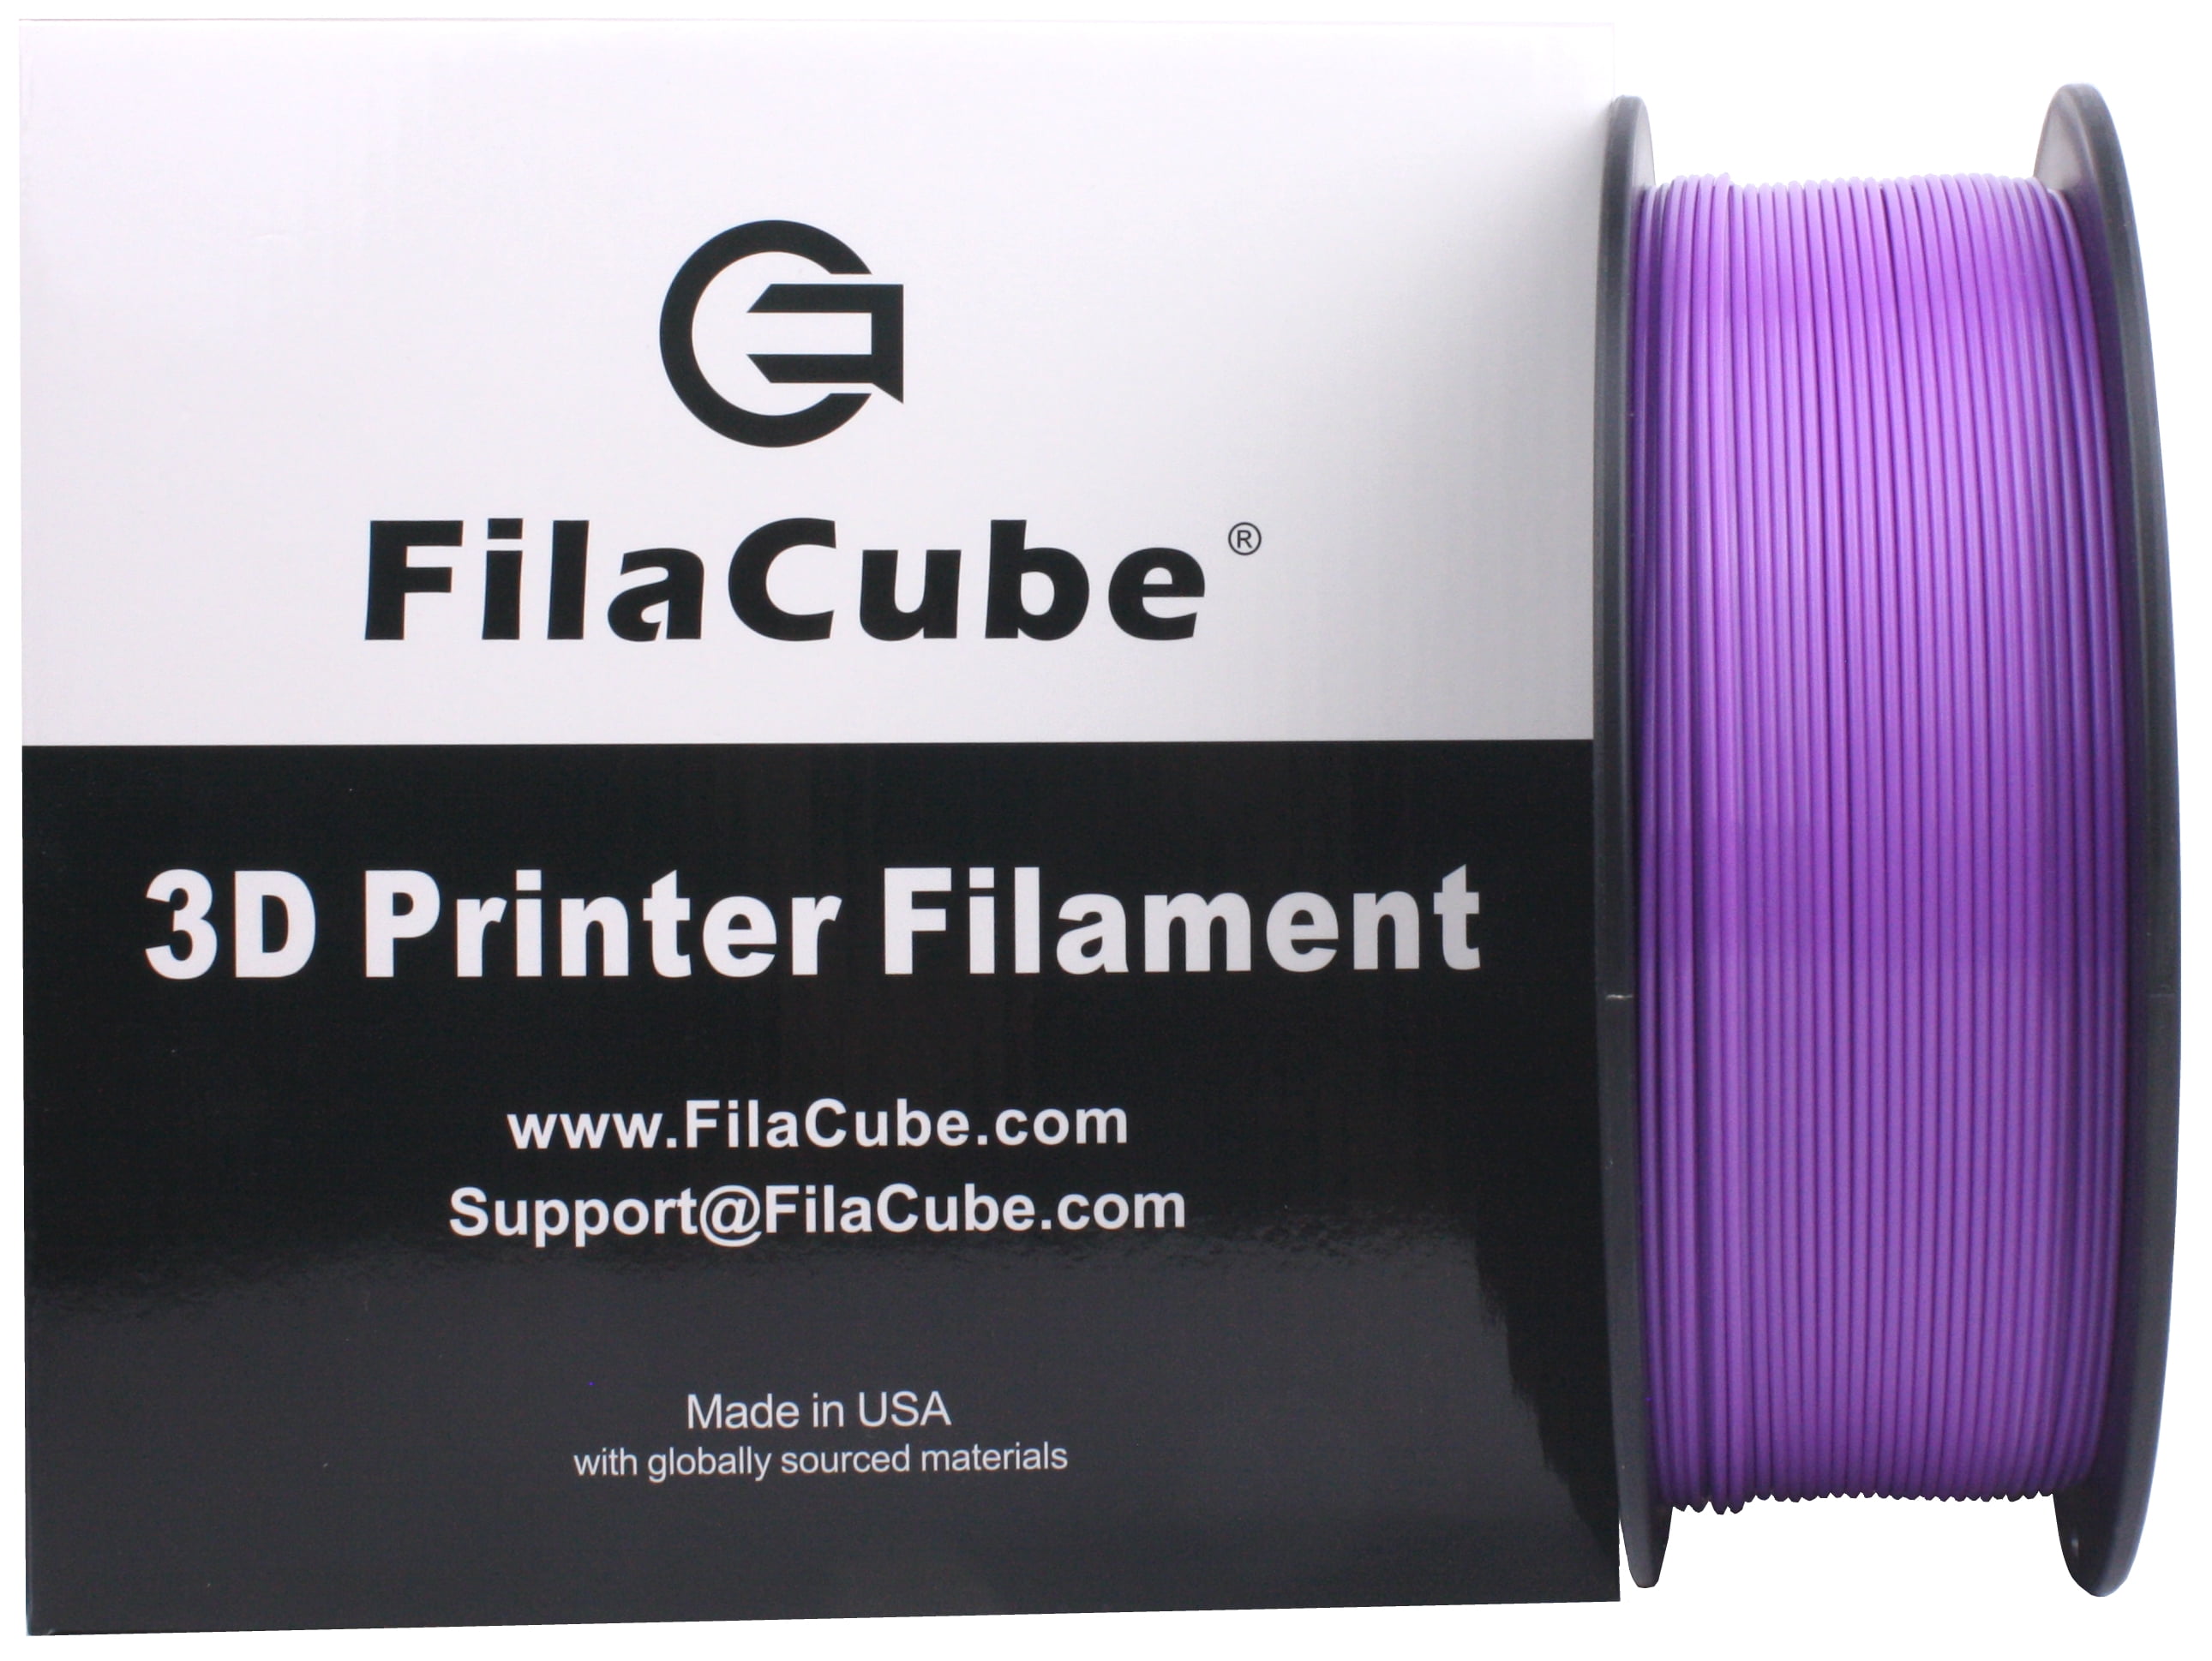 Creality 1KG 1.75mm Ender Hyper CR Silk PLA Plastic PETG Filament